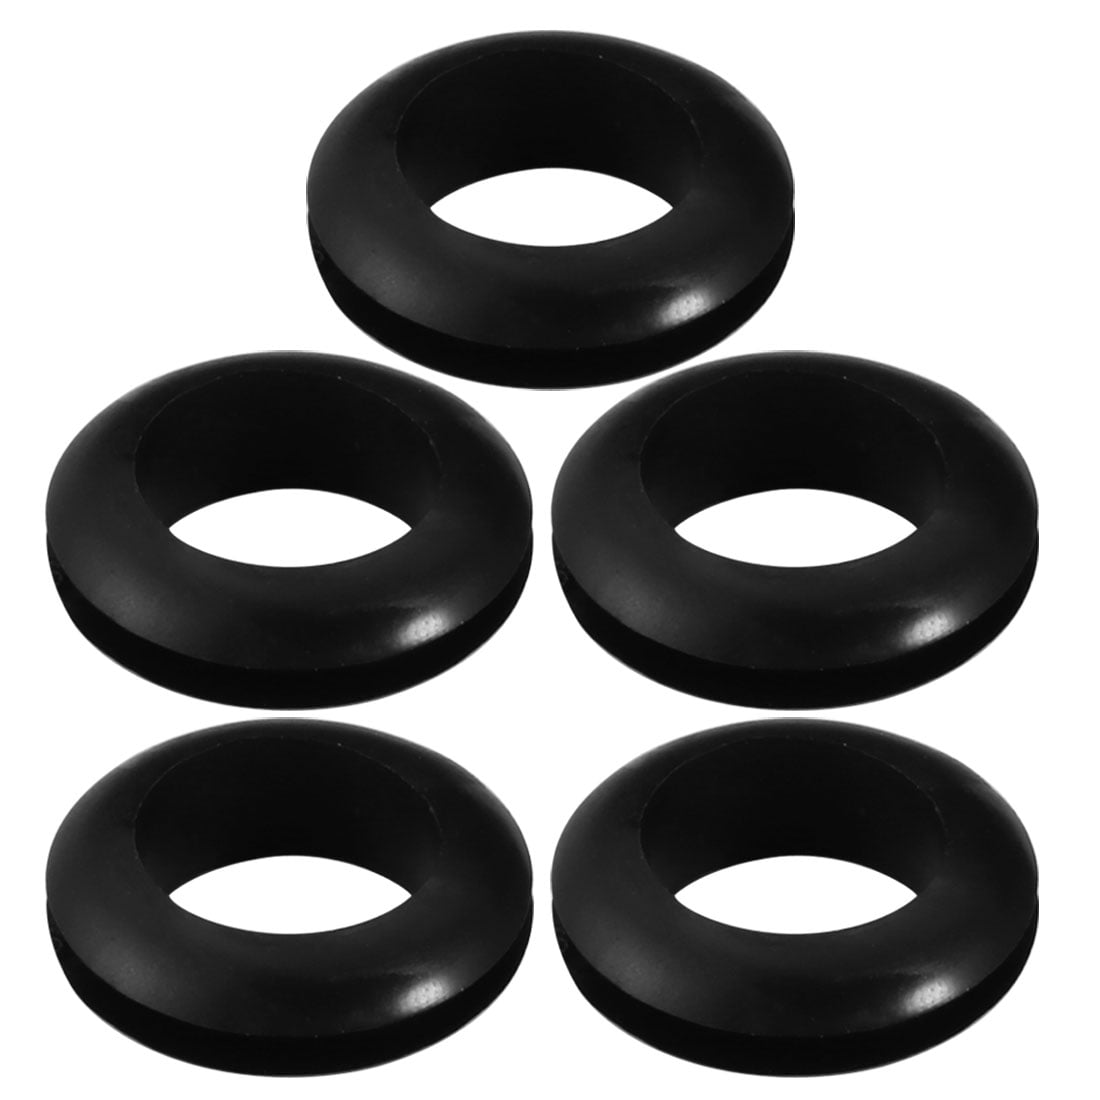 uxcell 50pcs Black 14mm x 1.8mm Oil Resistant Sealing Ring O-shape NBR Rubber Grommet 